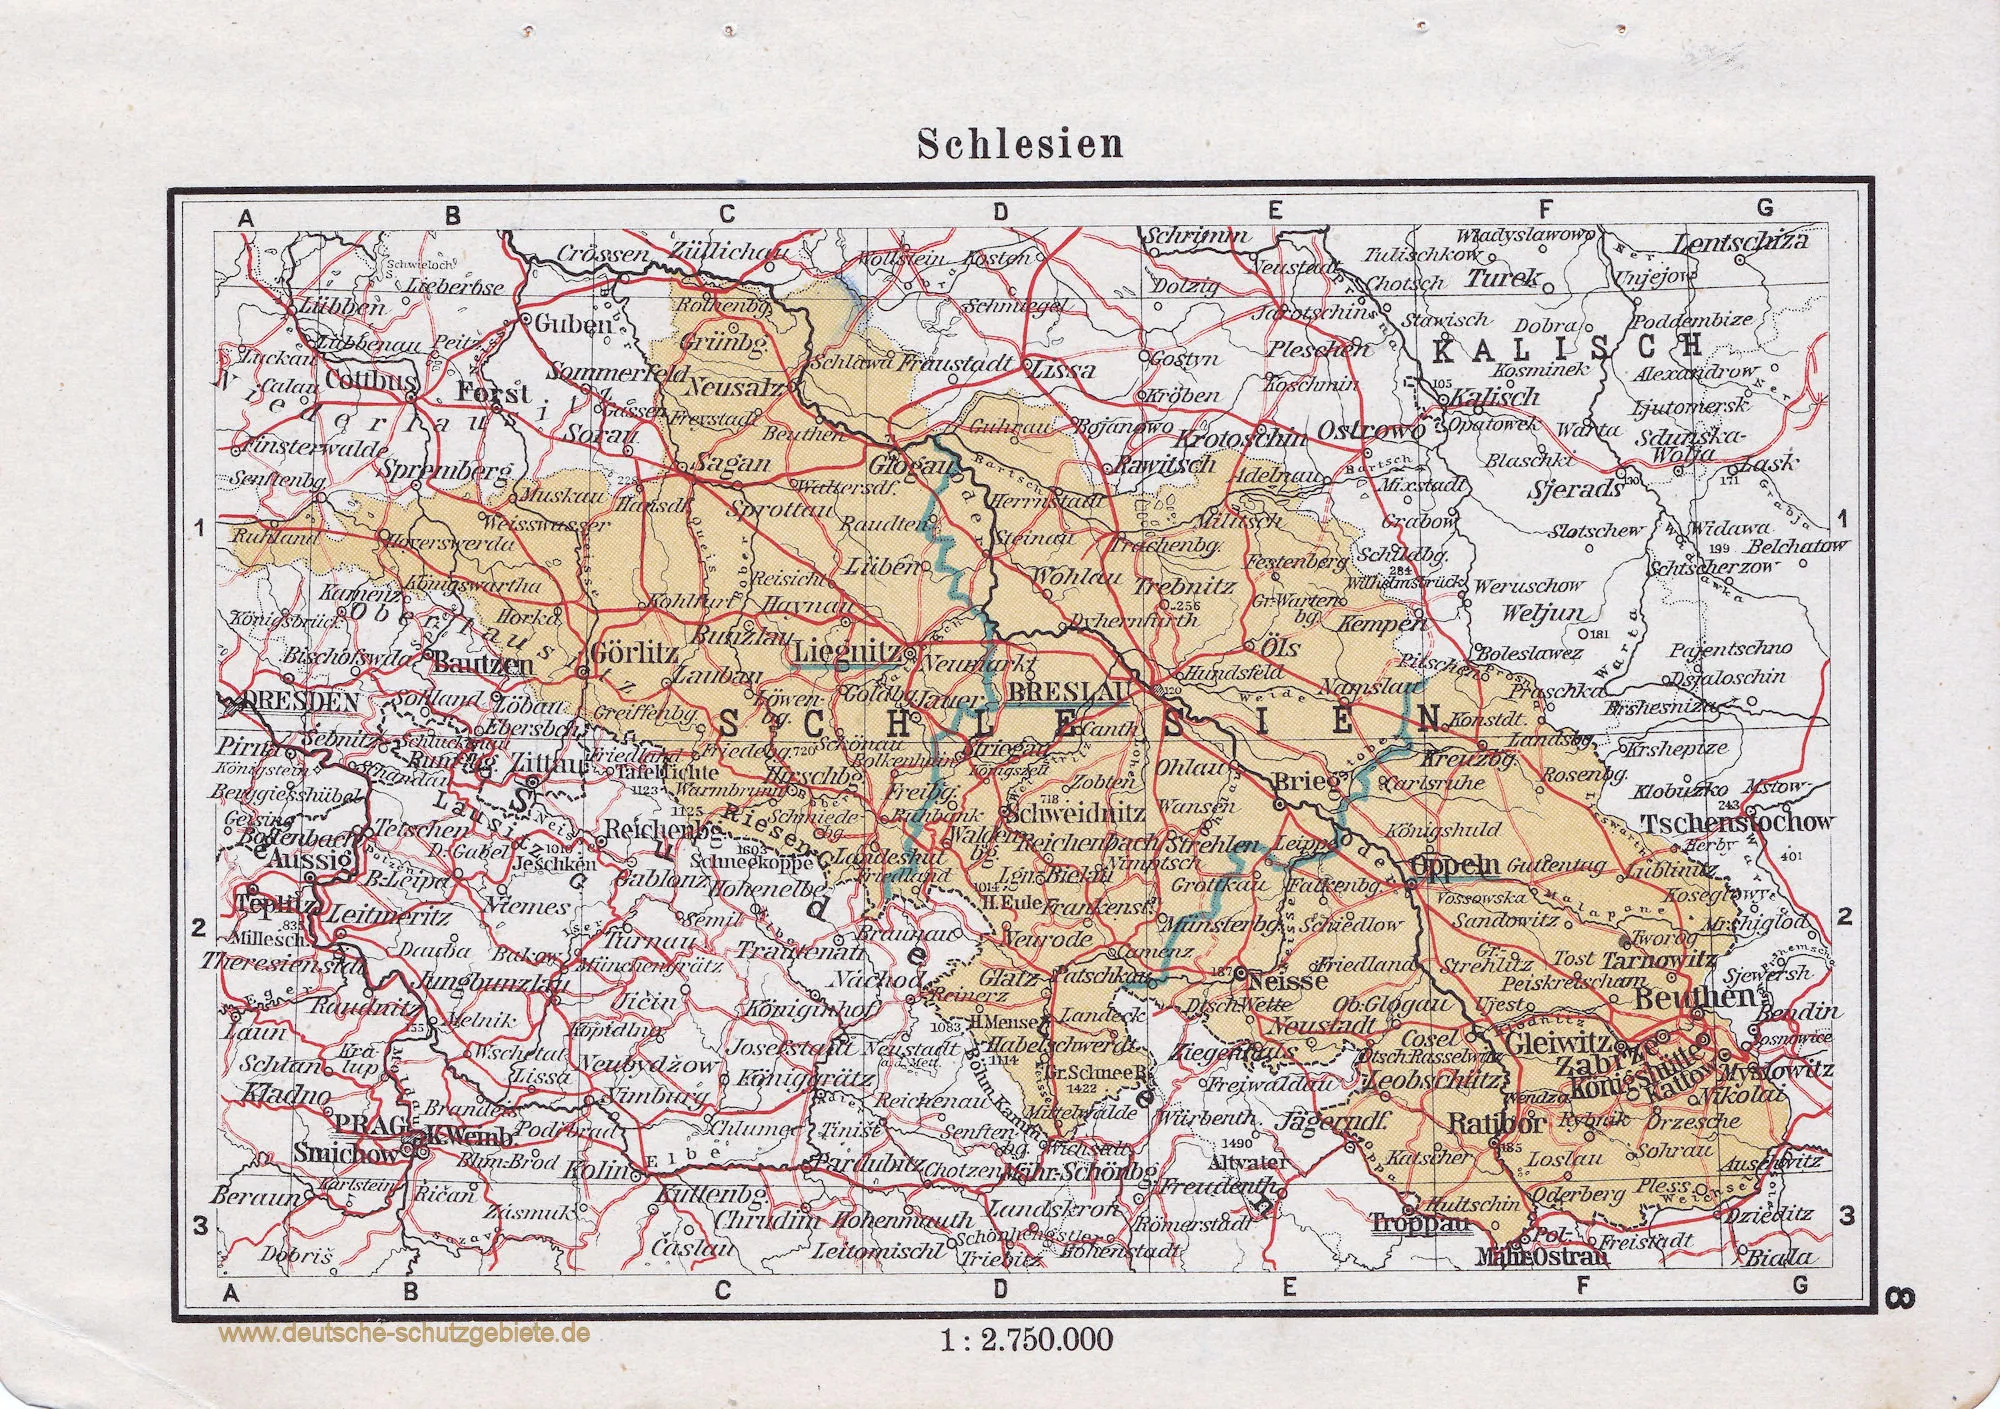 Mapa Śląska źródło: https://deutsche-schutzgebiete.de